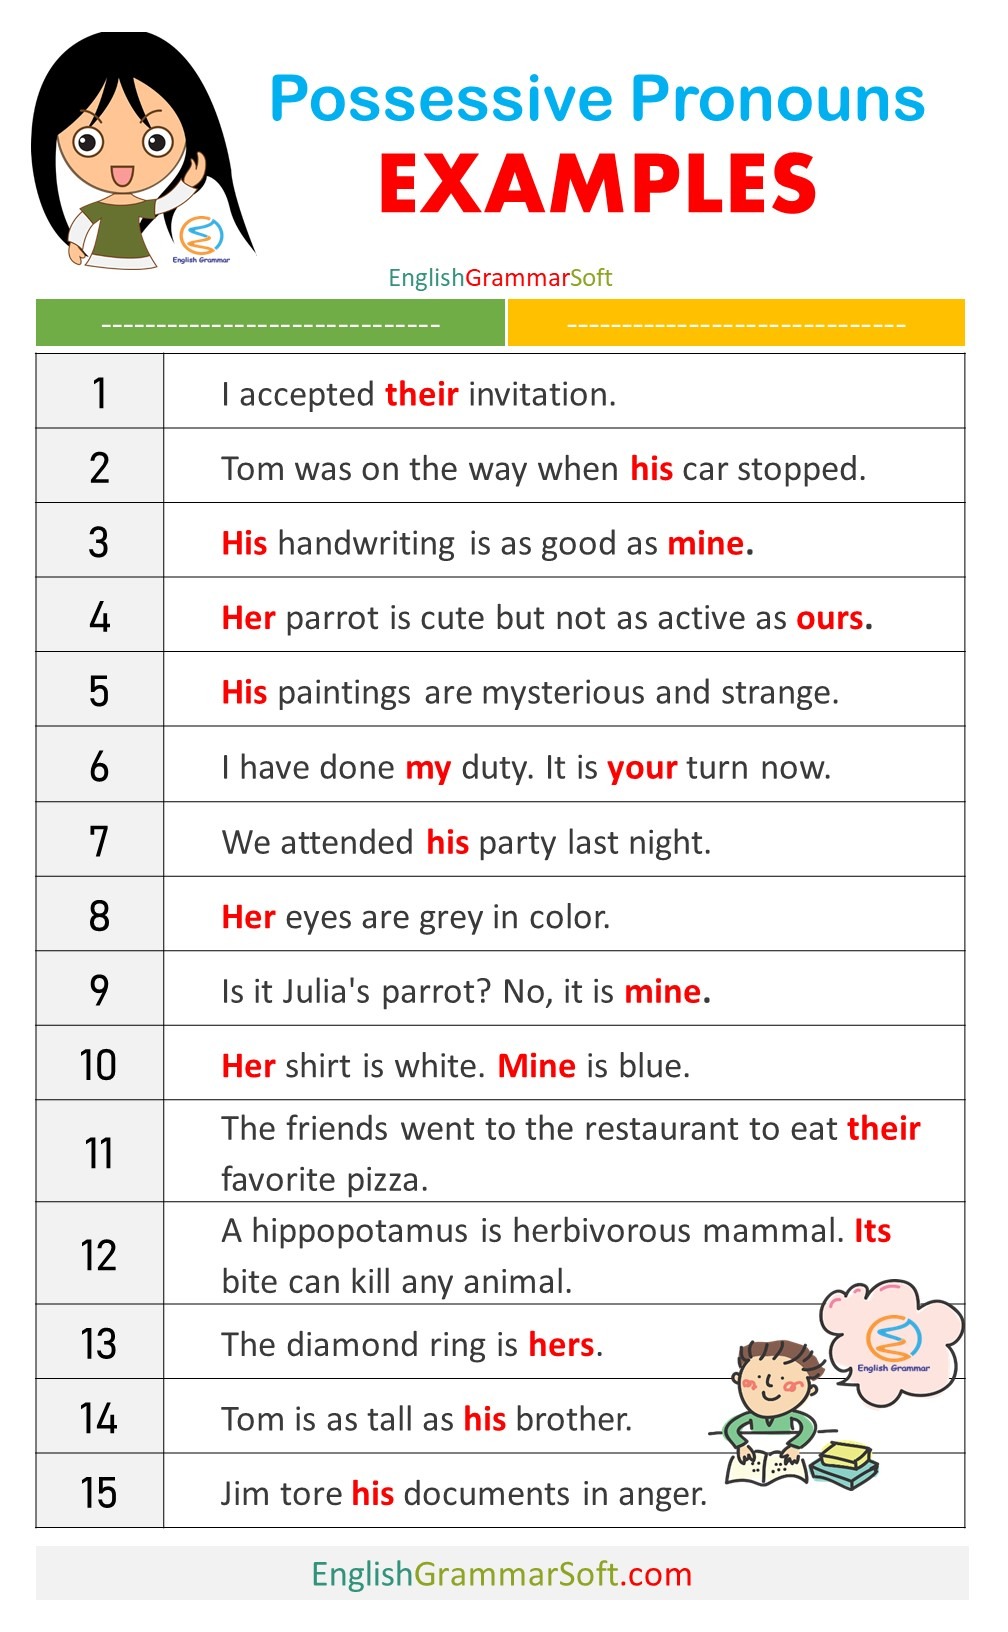 Possessive Pronouns Examples List Rules Exercise EnglishGrammarSoft